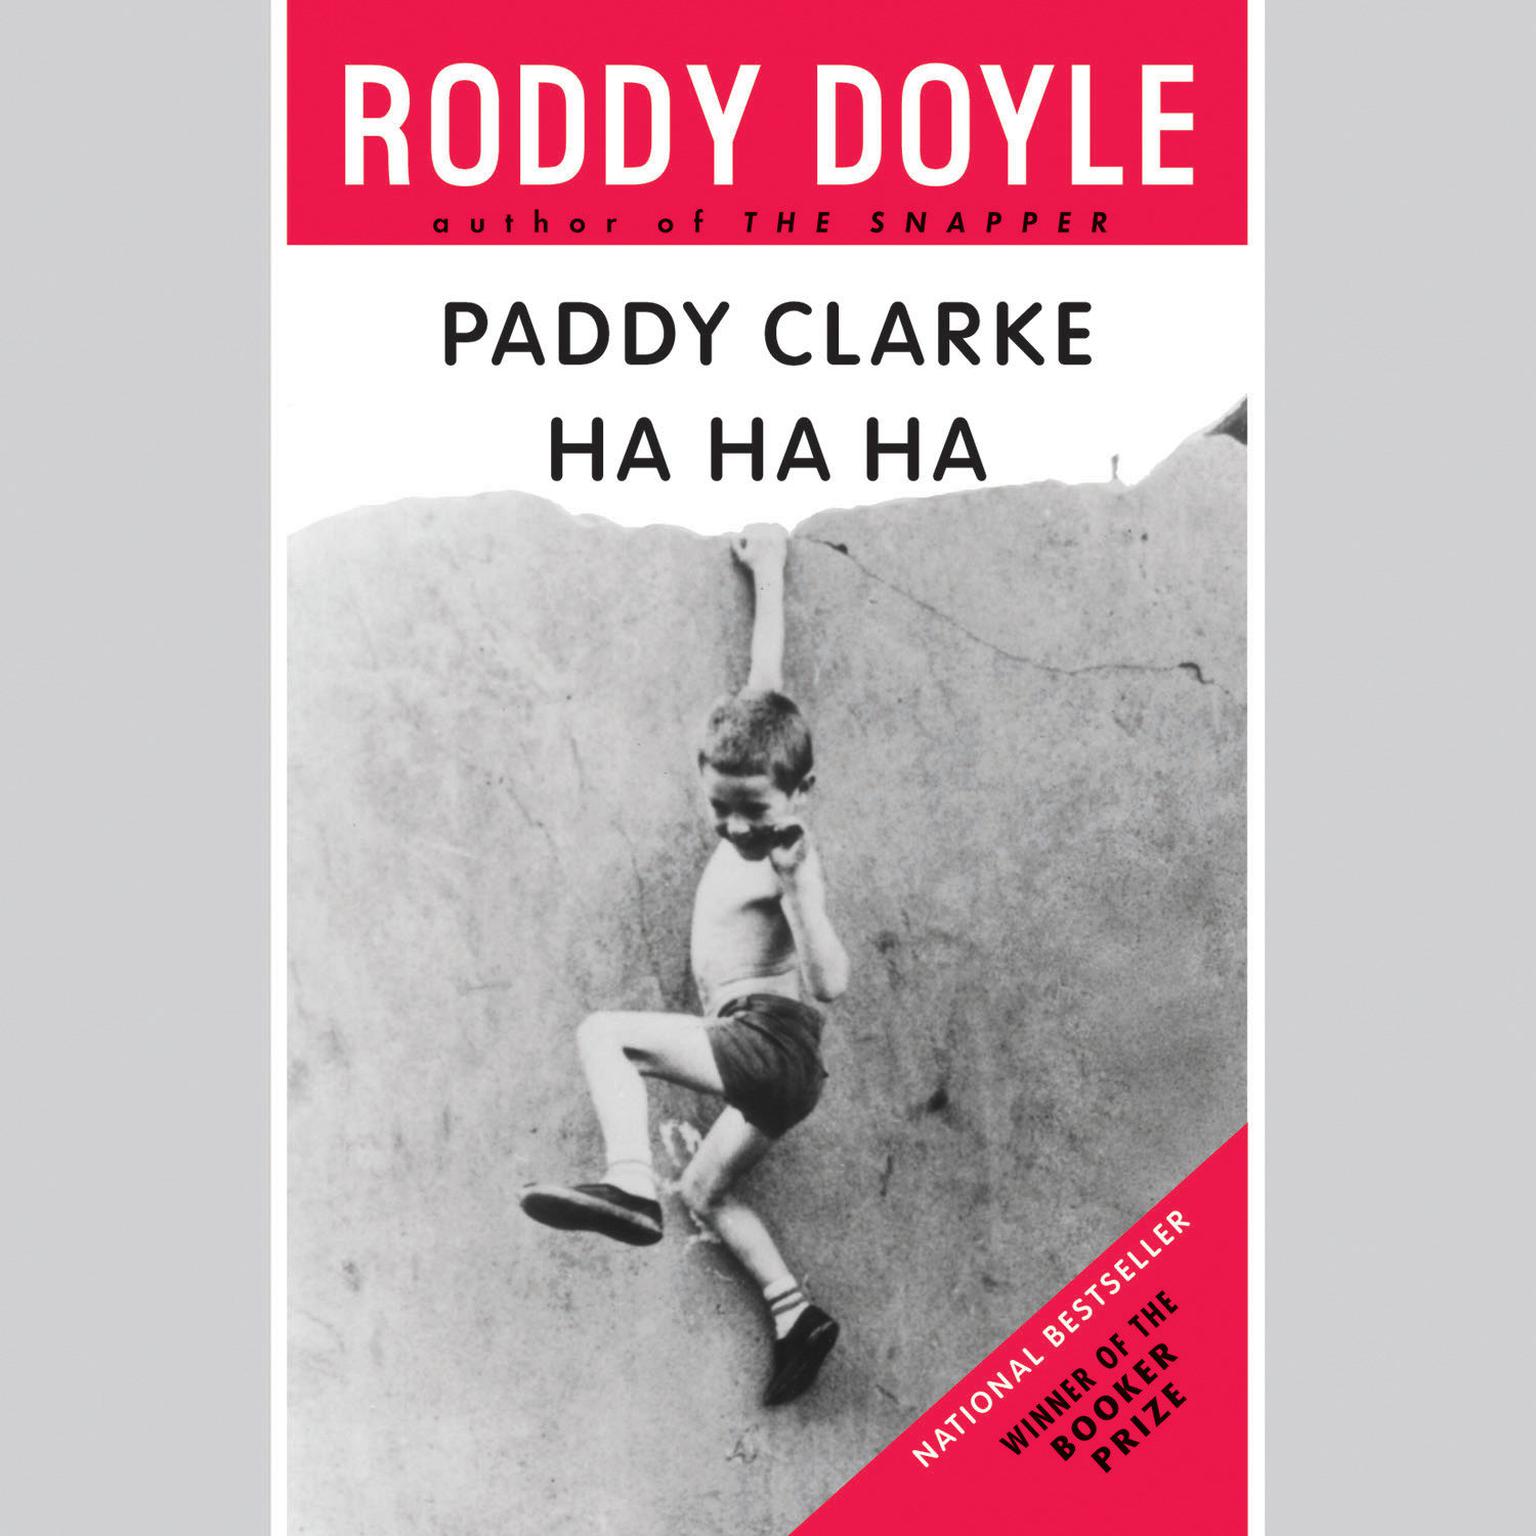 Paddy Clarke Ha Ha Ha (Abridged) Audiobook, by Roddy Doyle